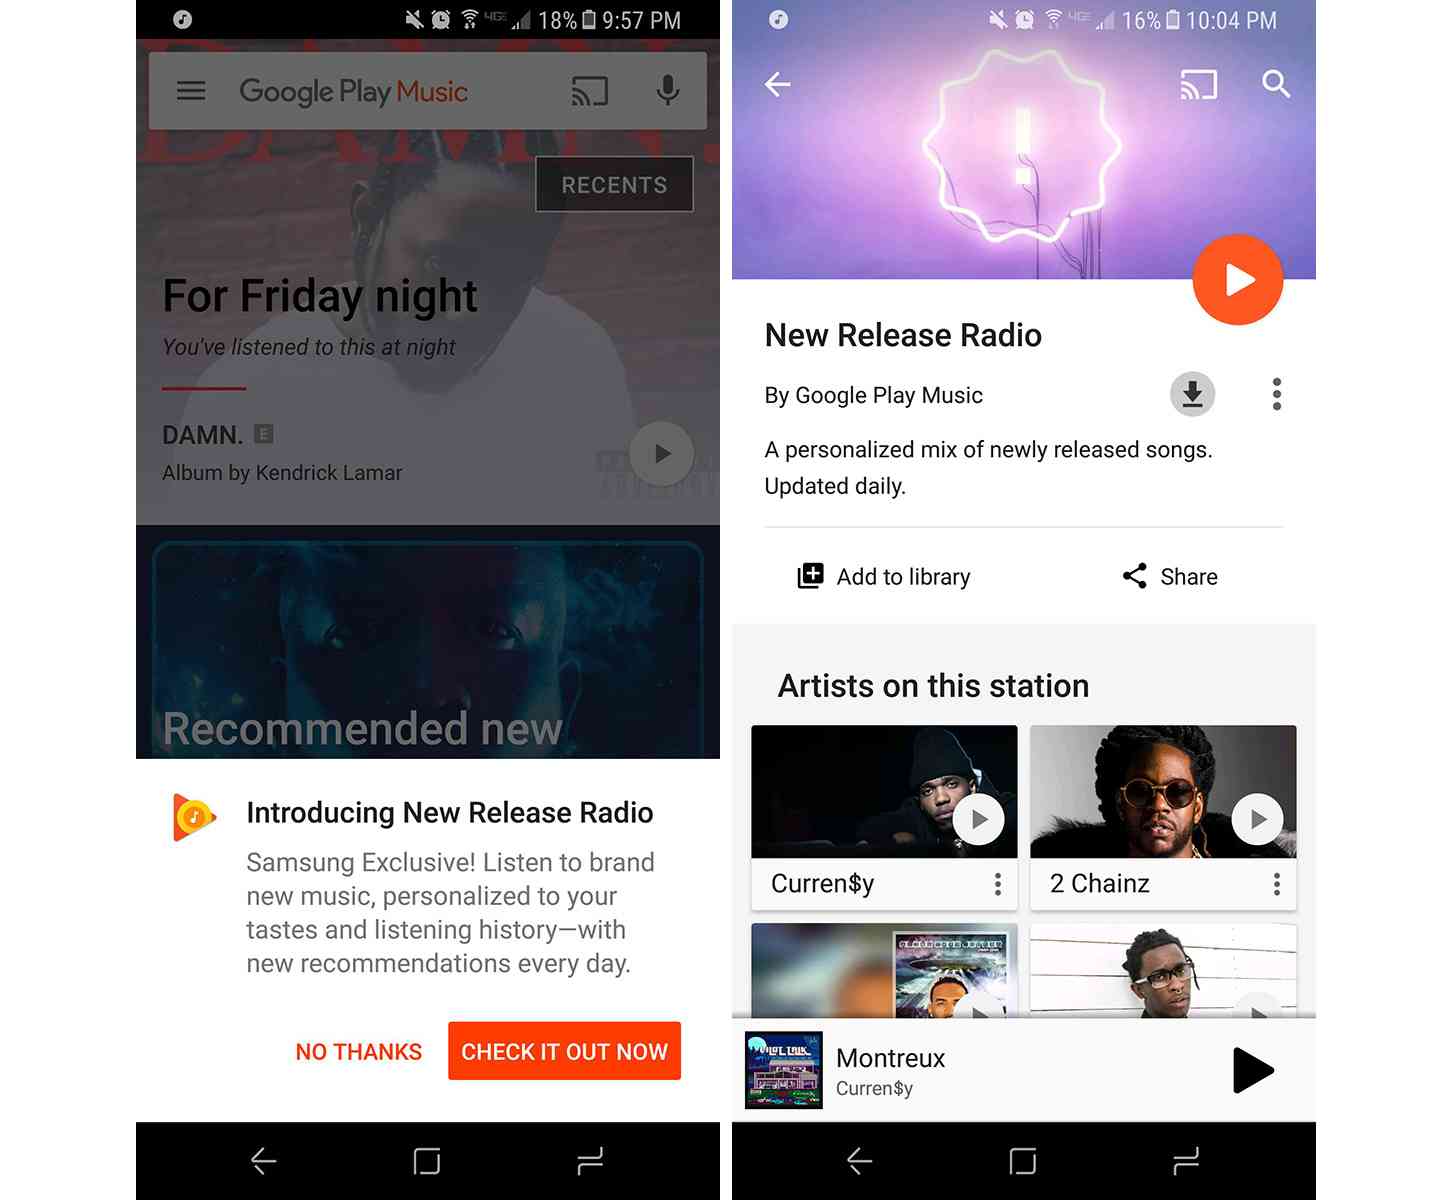 Samsung Galaxy S8 Google Play Music New Release Radio